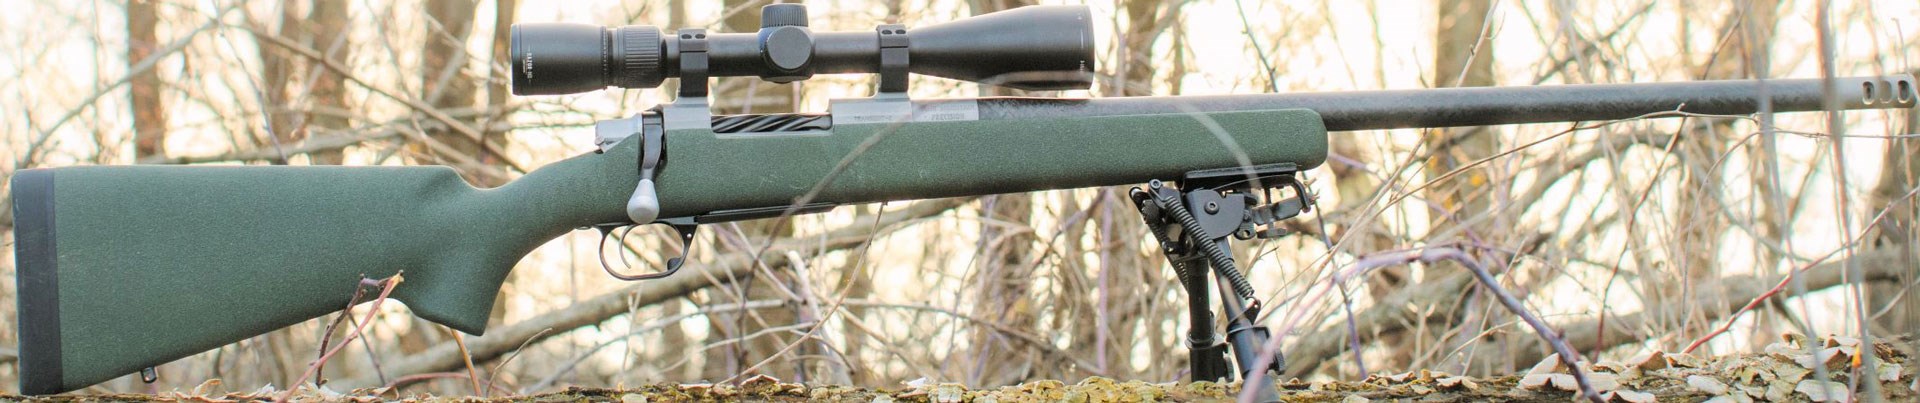 Sporter rifle on log